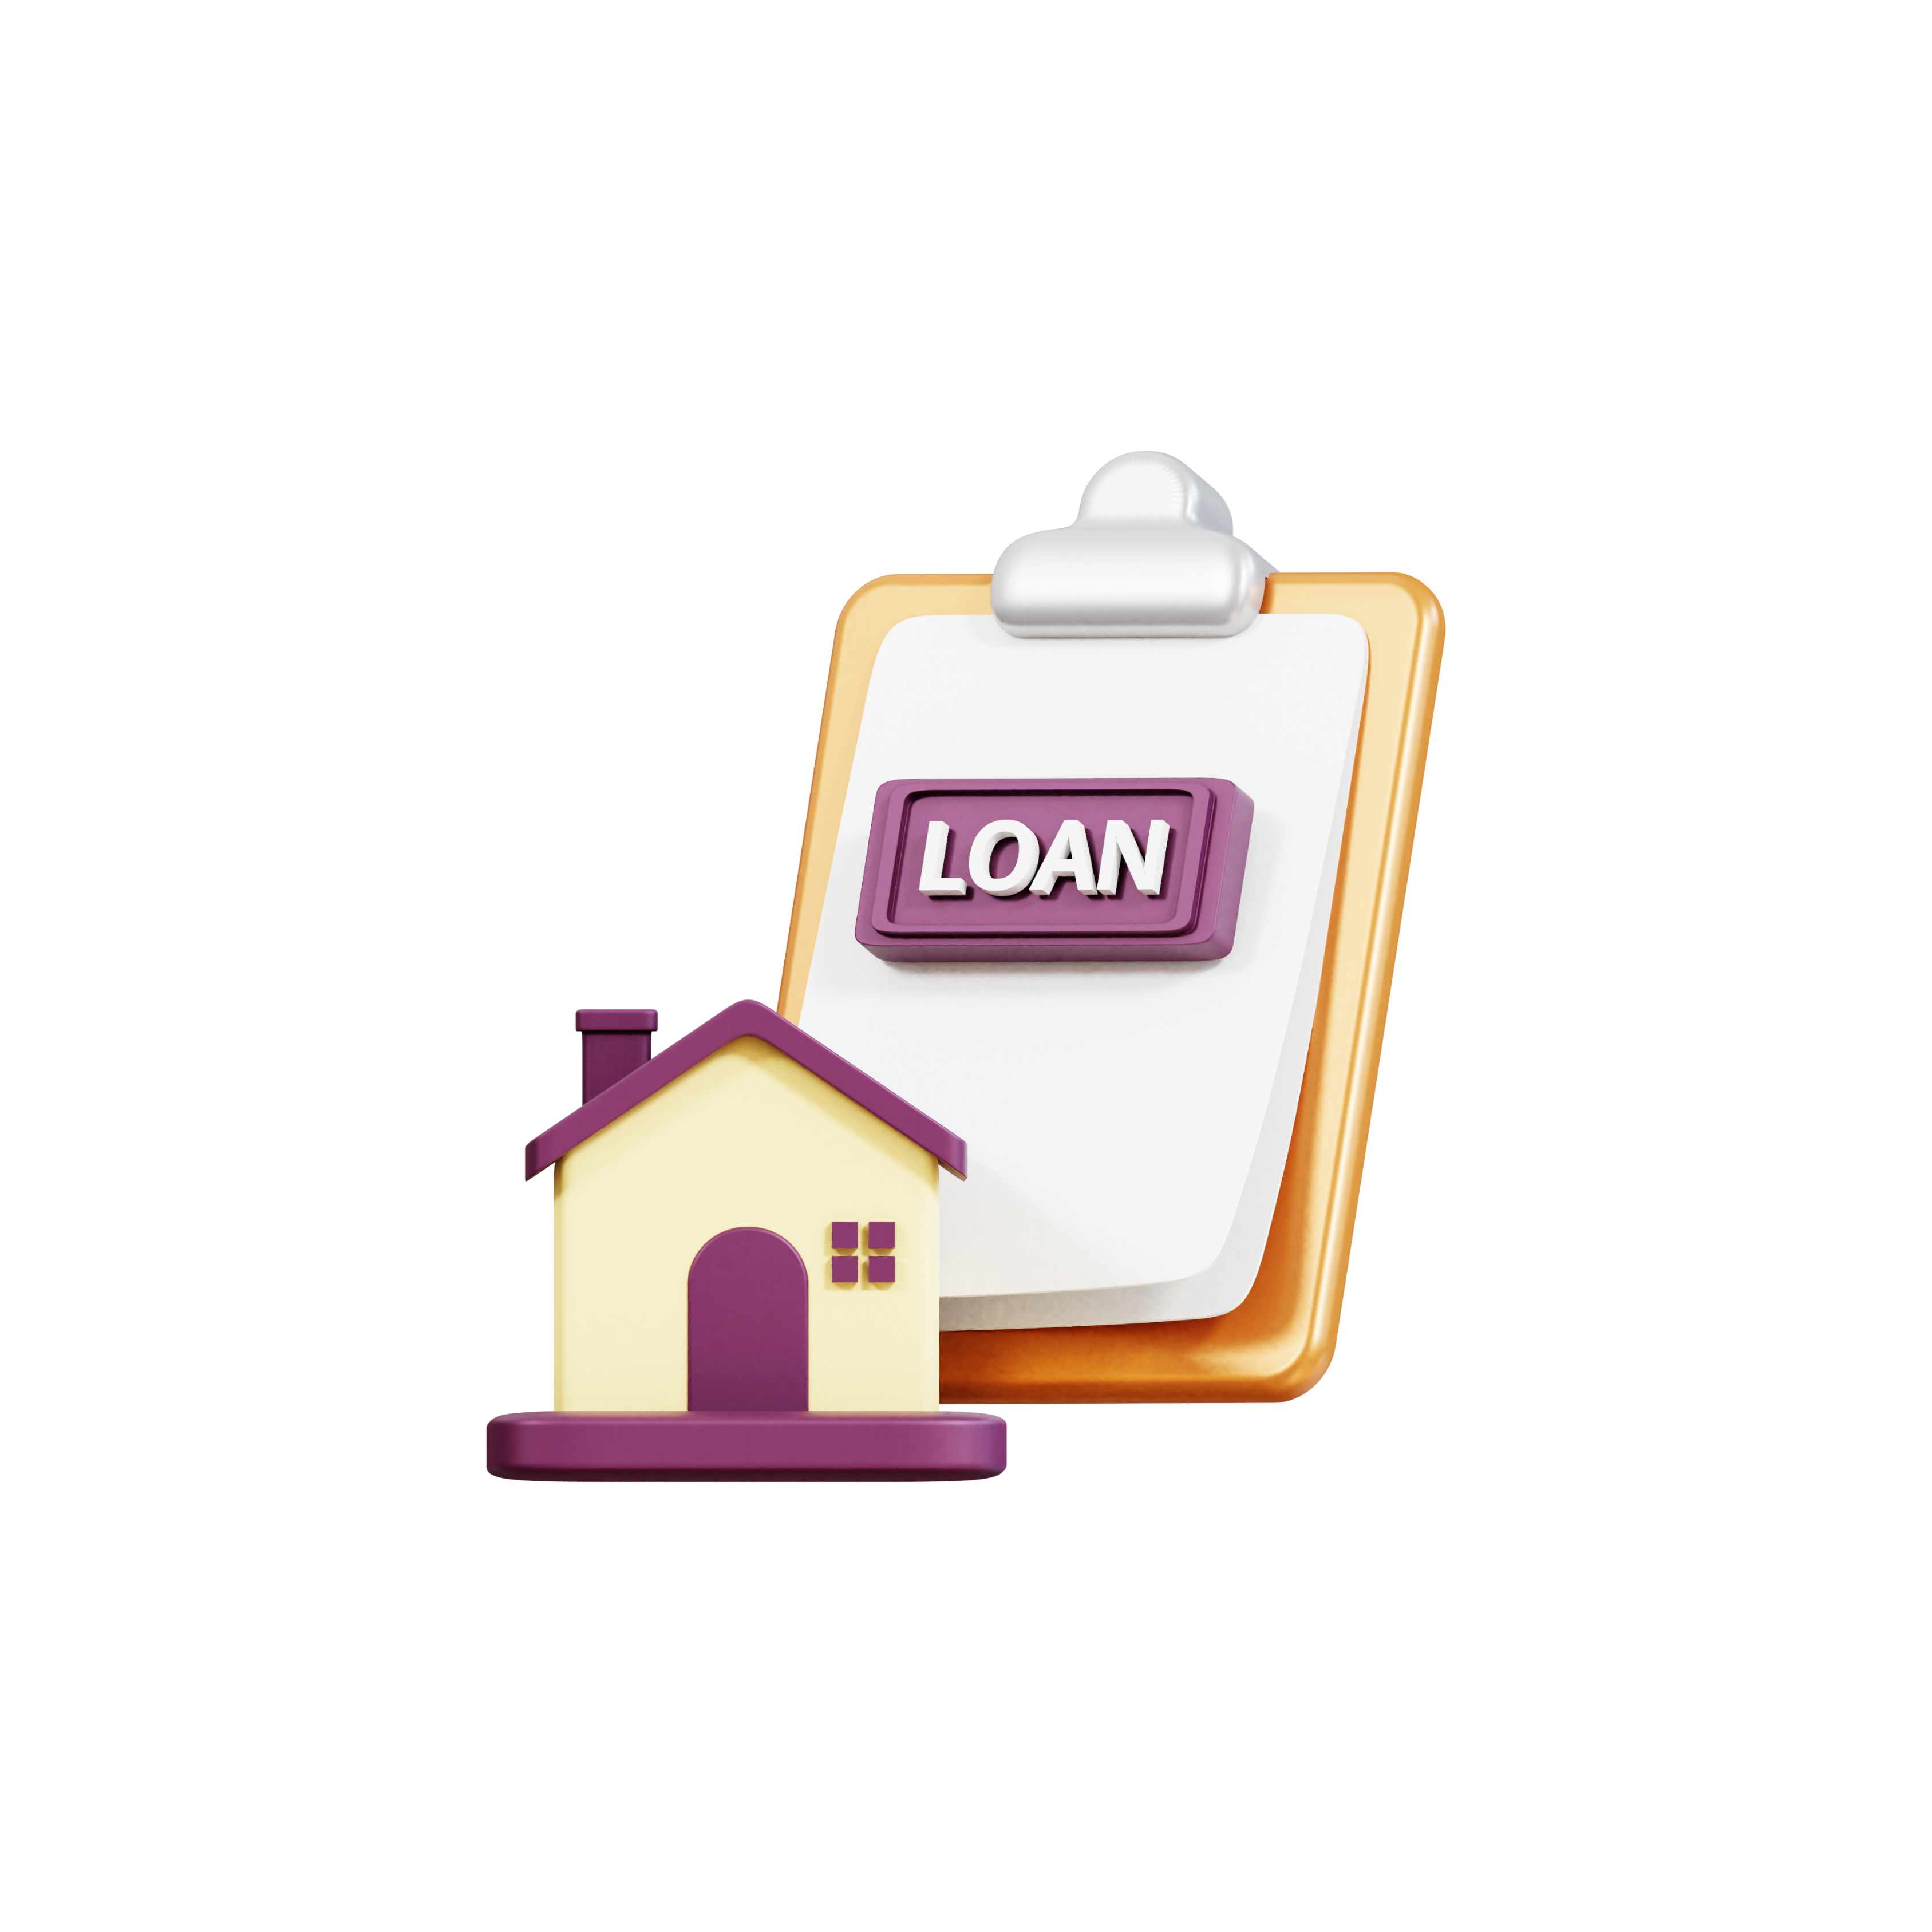 home loan